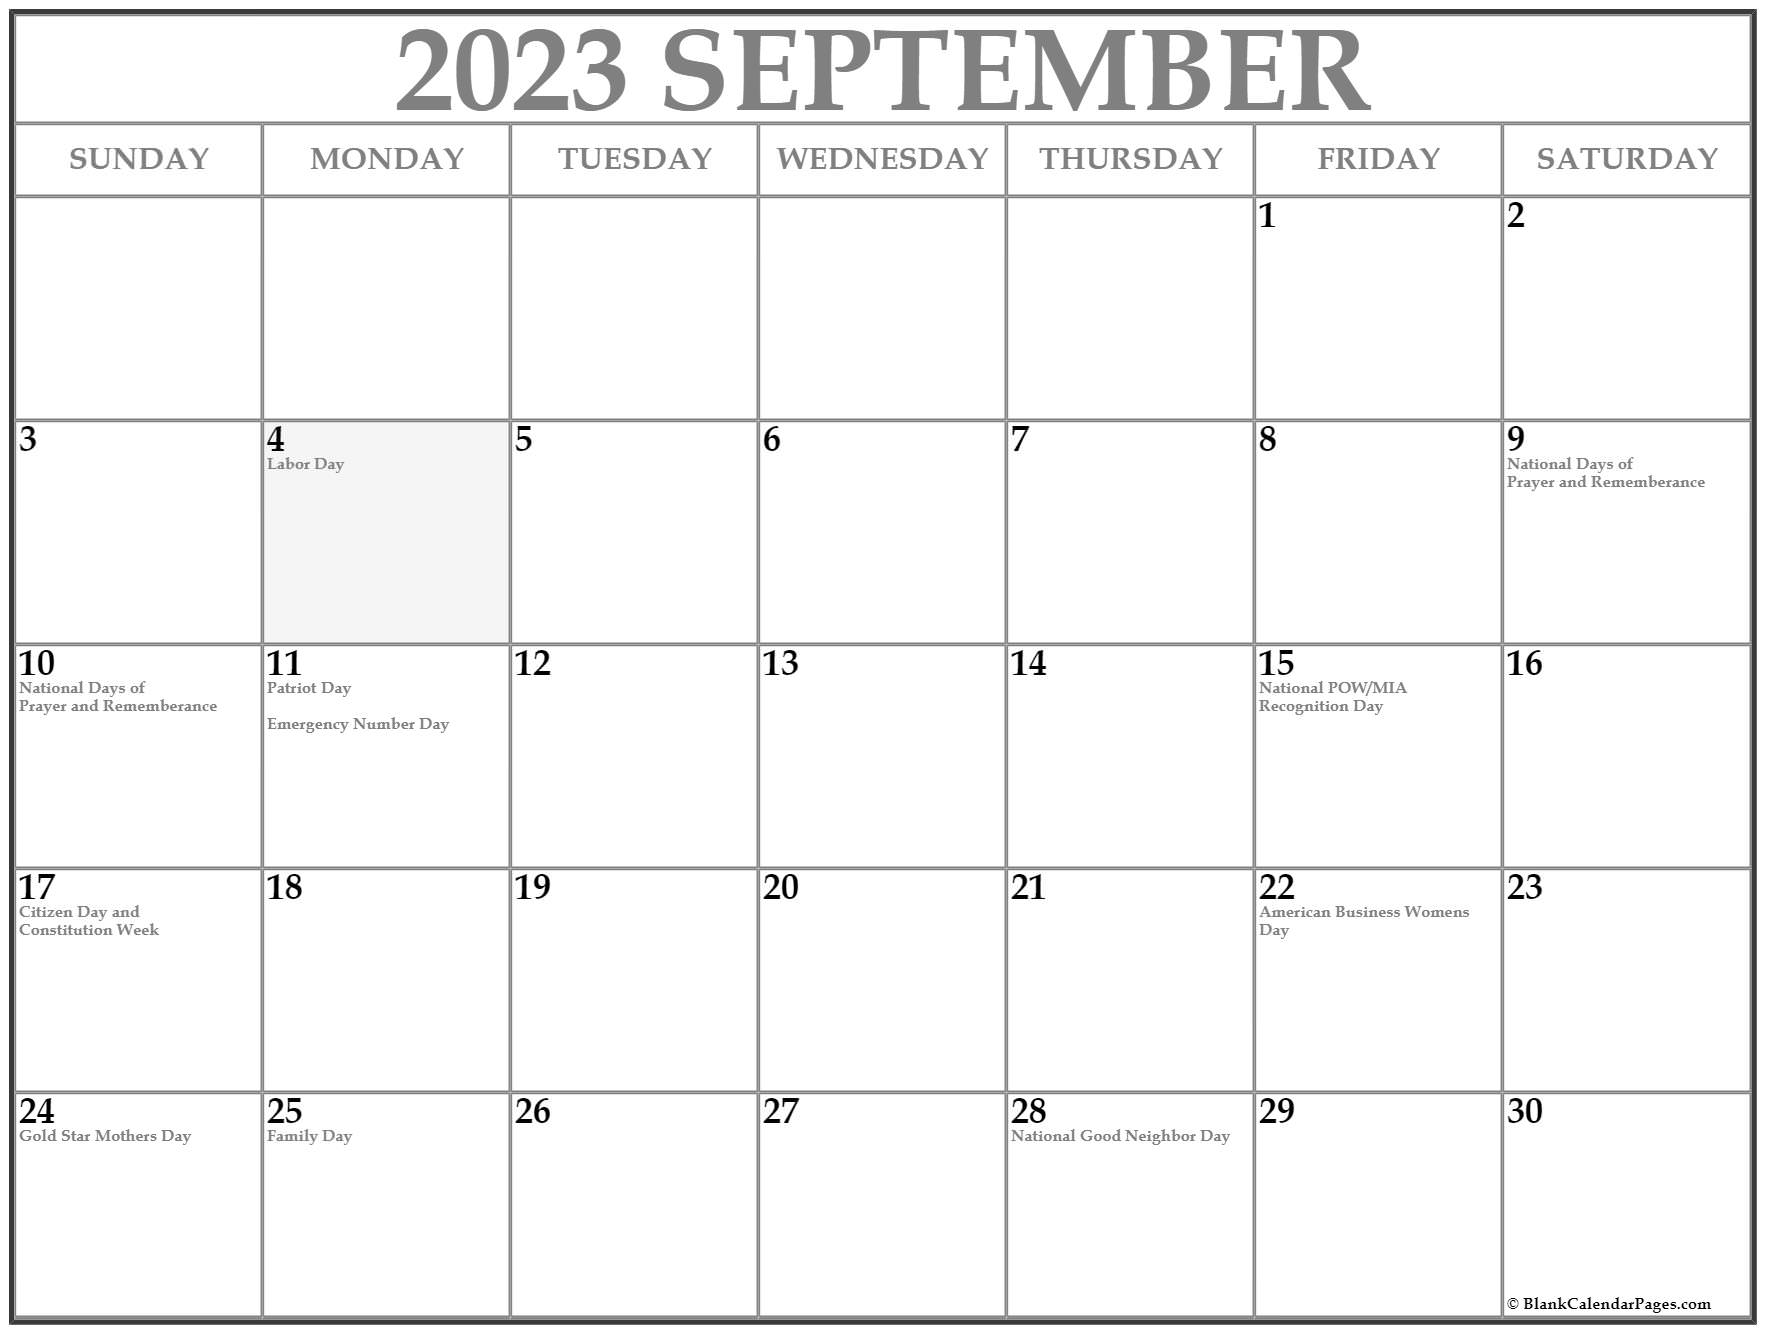 September 2023 Calendar Catholic Feast Days - Get Latest Map Update